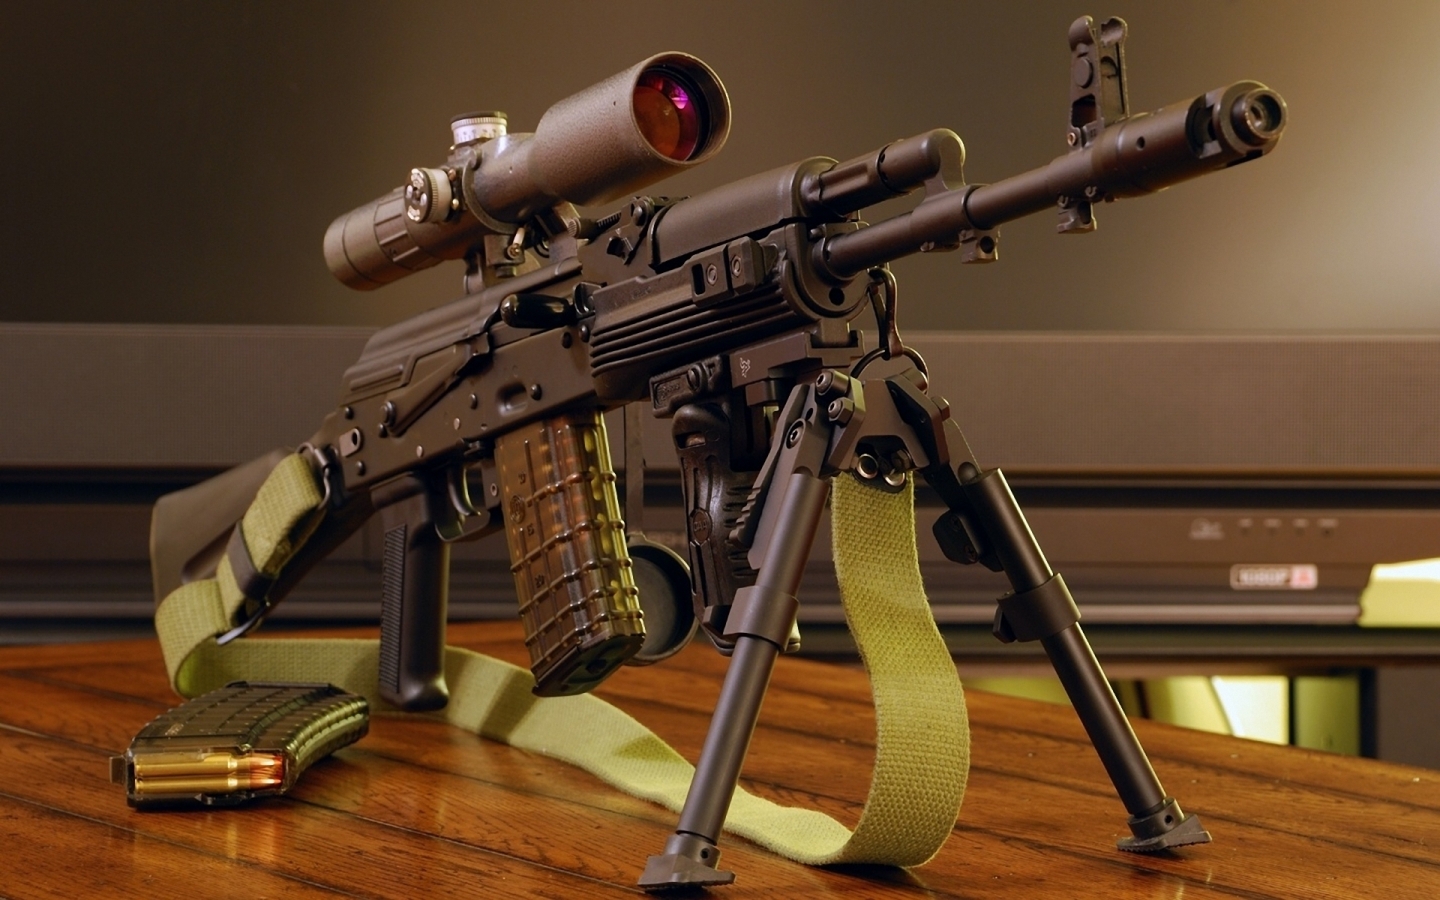 Automatic Gun AK-101 for 1440 x 900 widescreen resolution